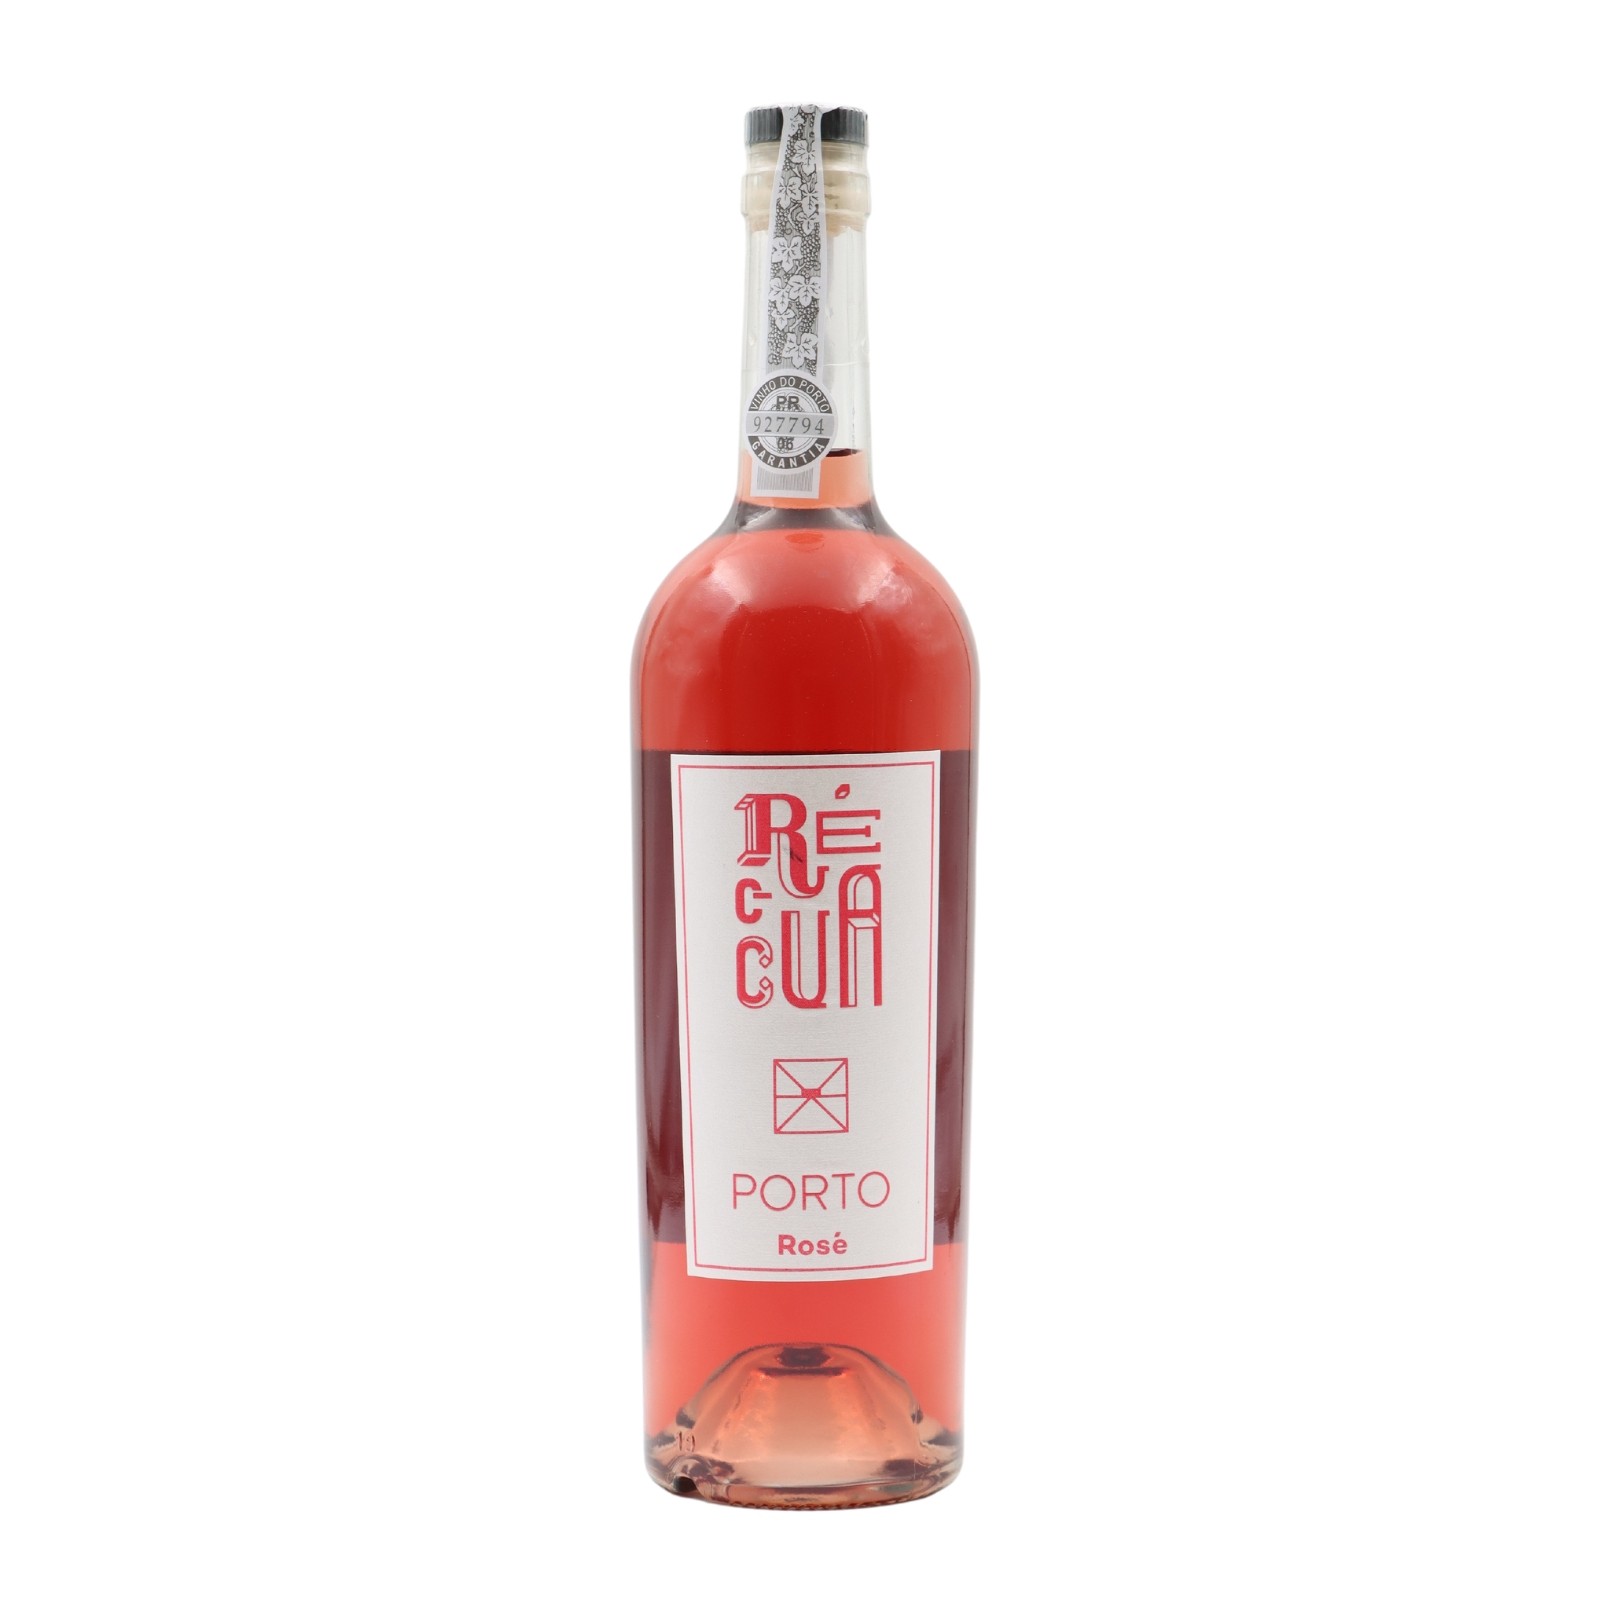 Réccua Pink Cocktail Portwein